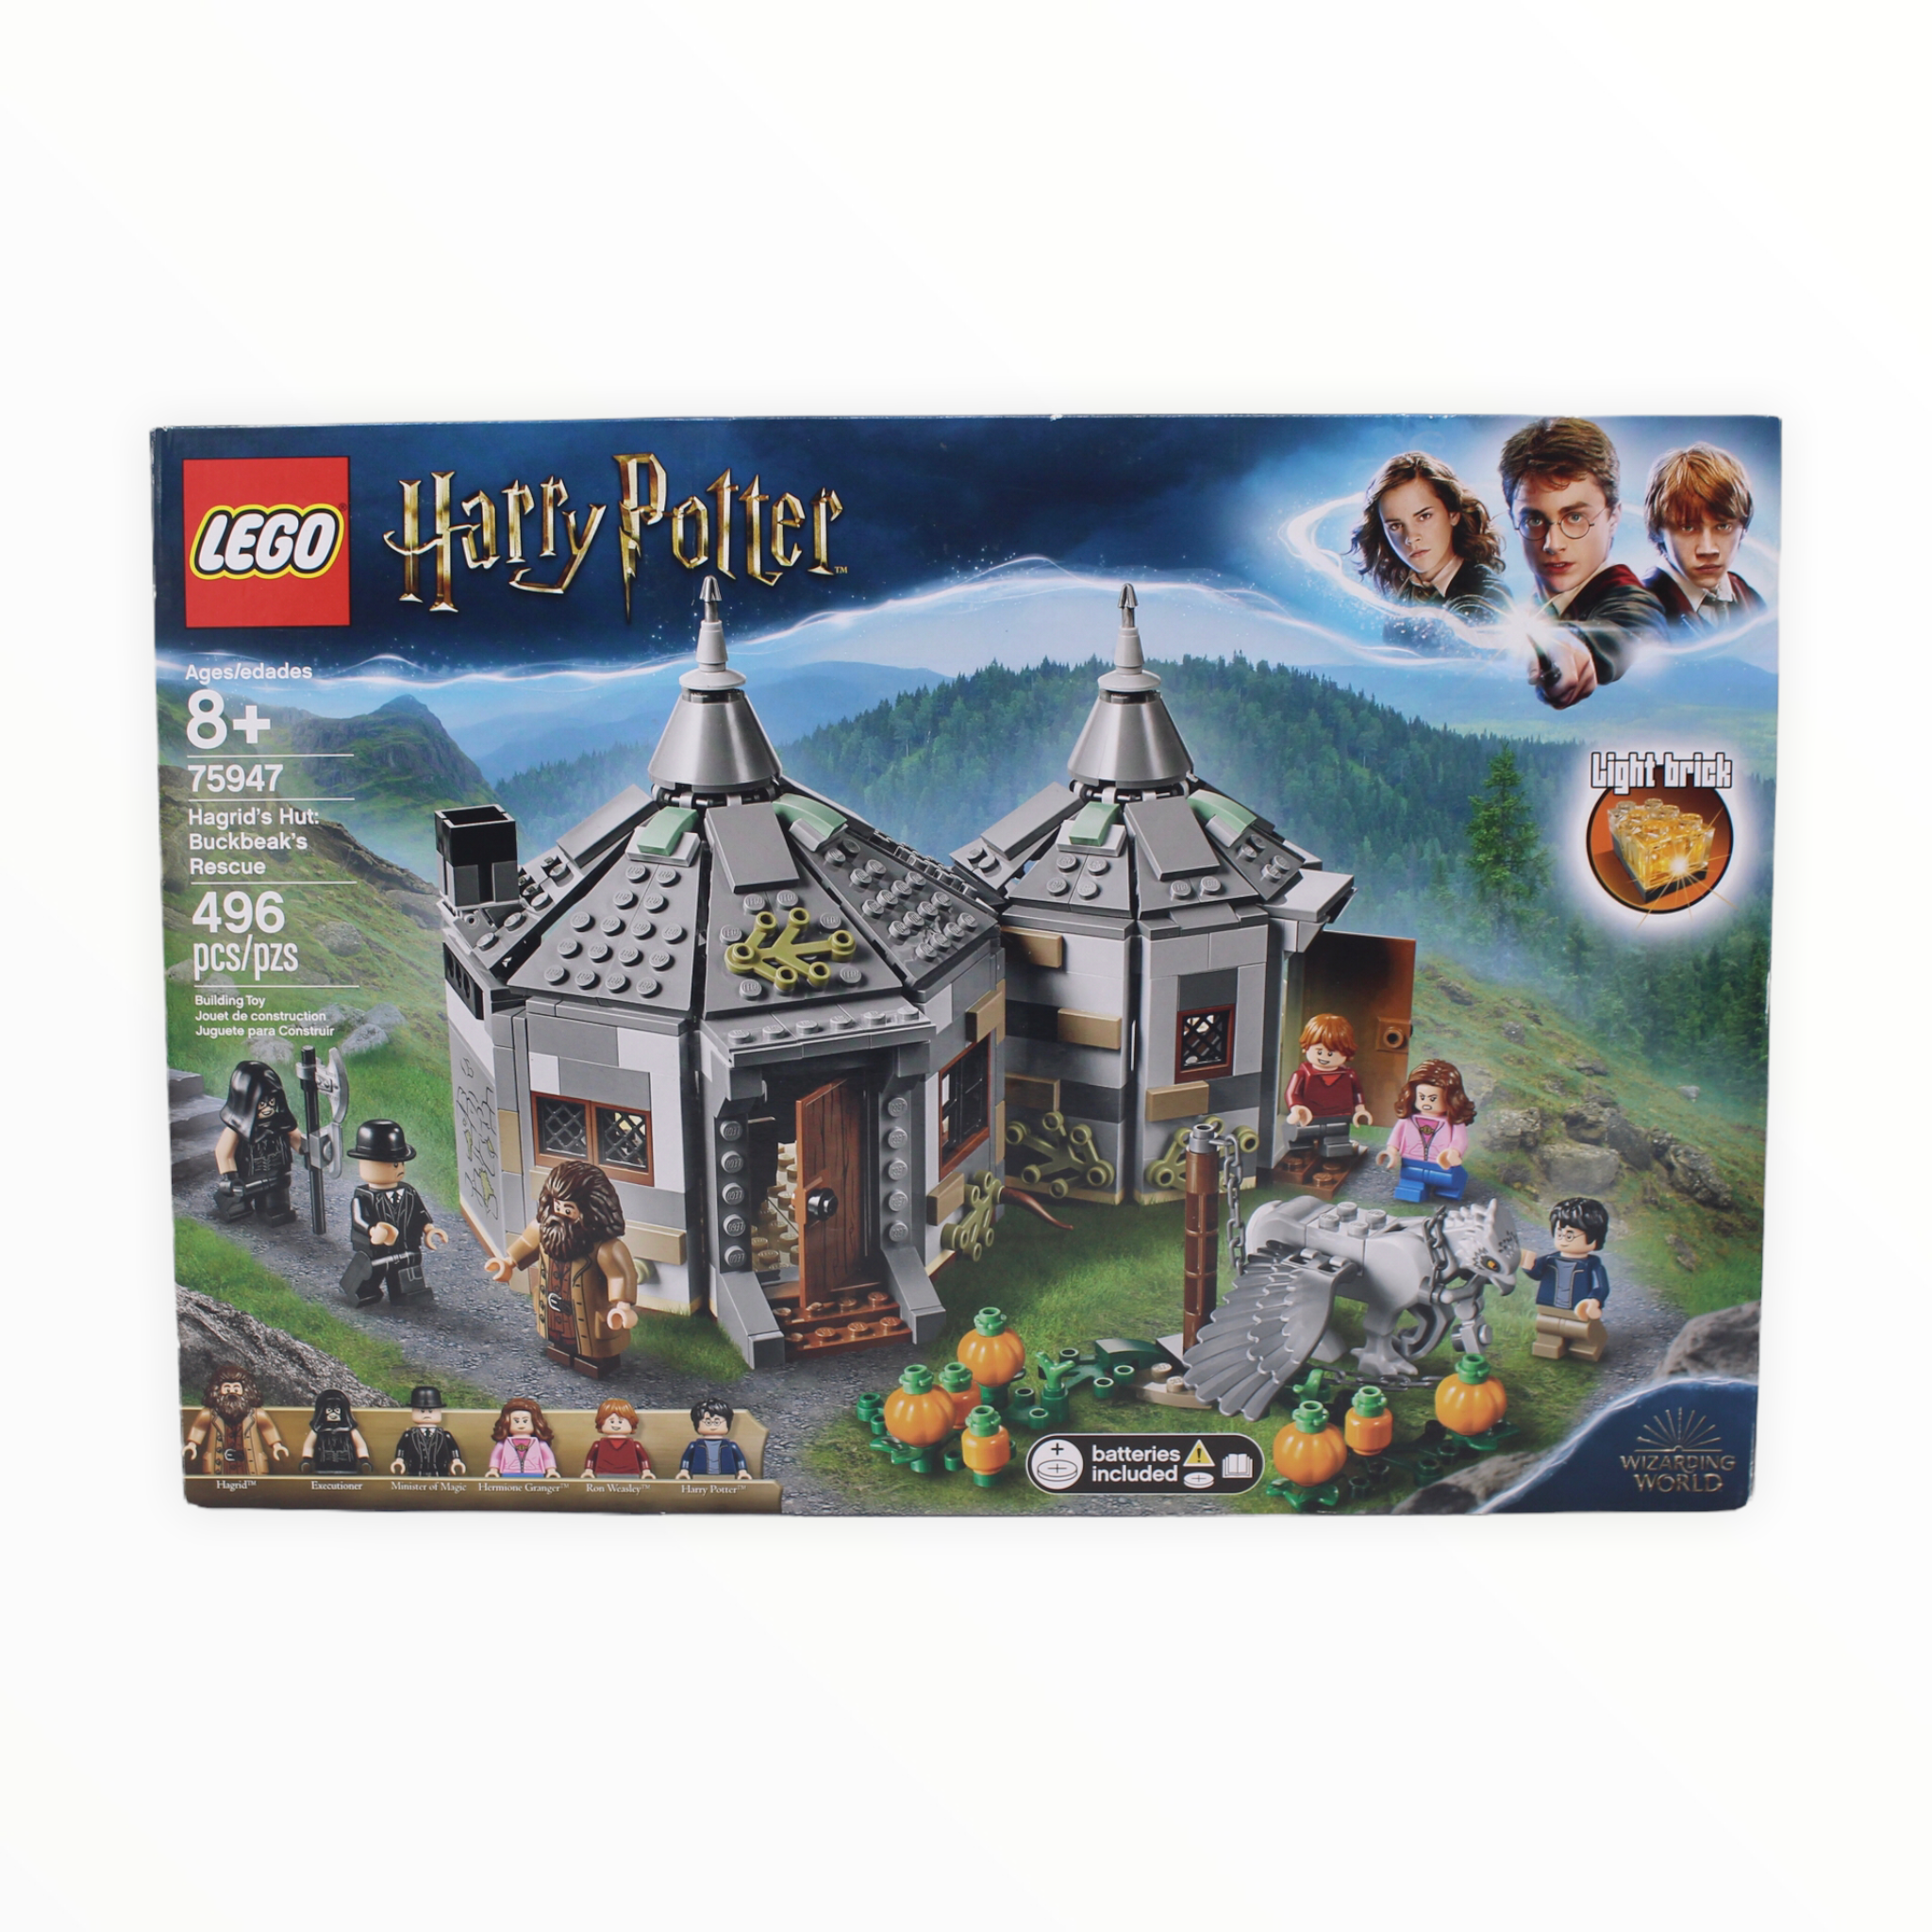 Retired Set 75947 Harry Potter Hagrid’s Hut: Buckbeak’s Rescue